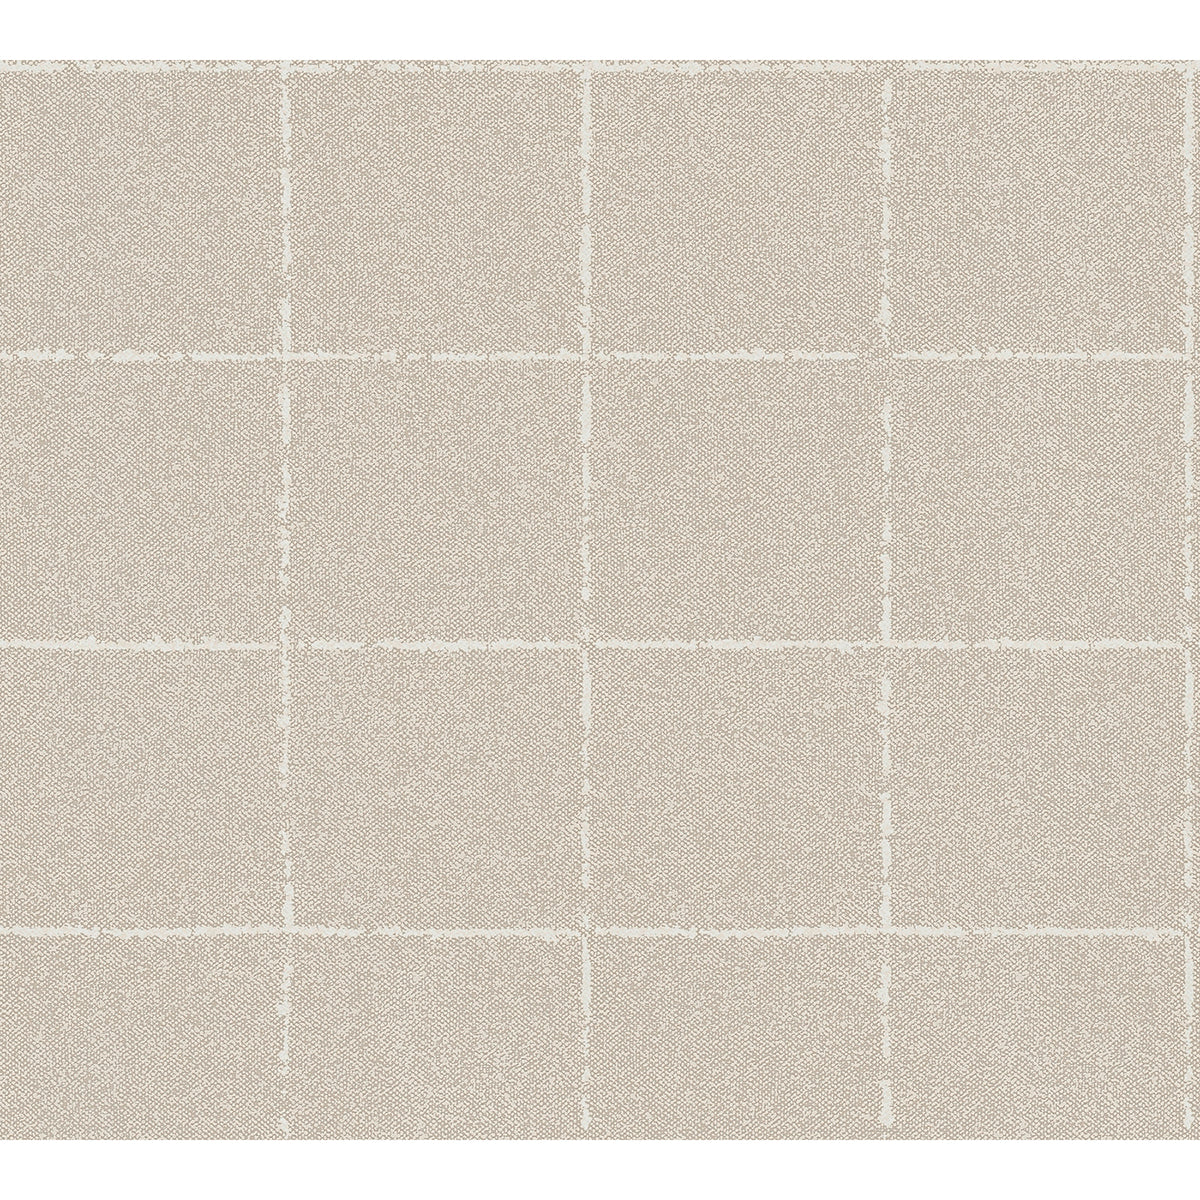 Picture of Kishi Neutral Tile Wallpaper